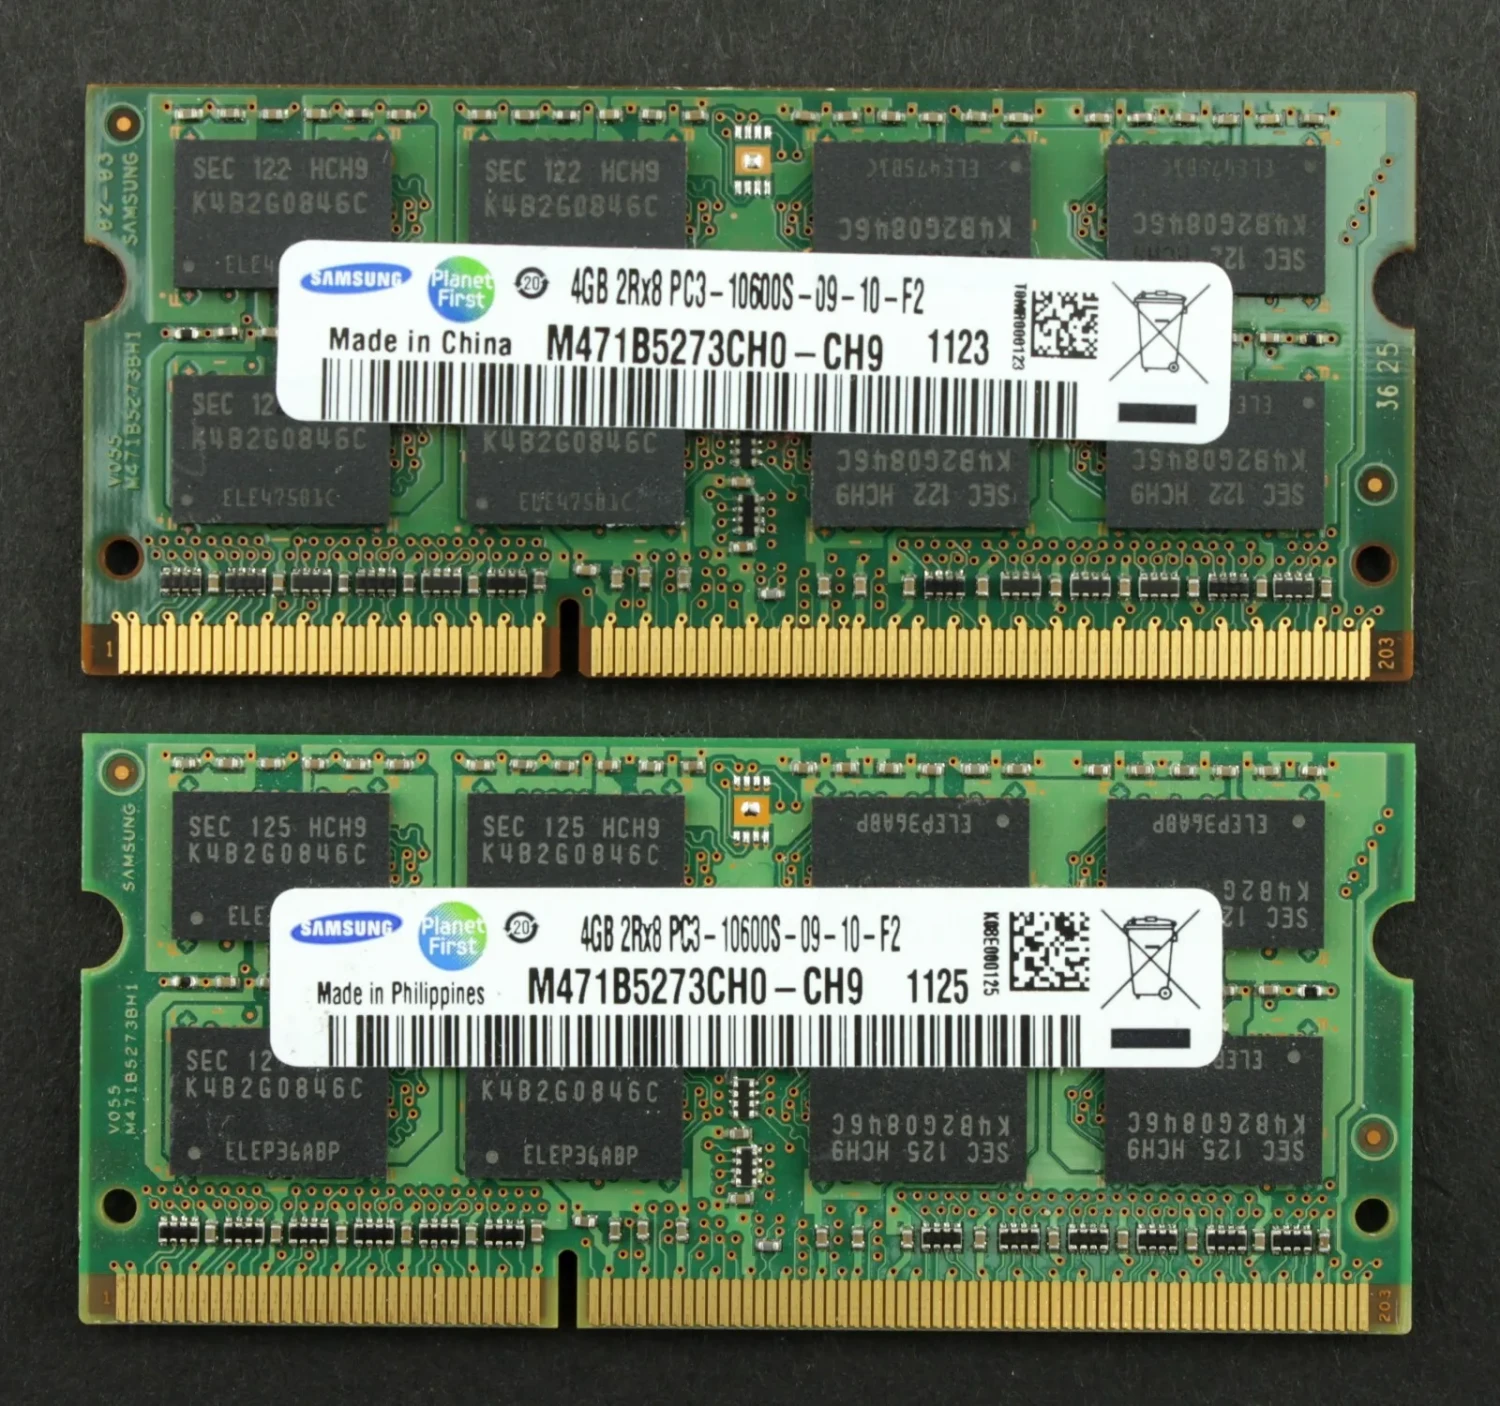 PC3 Ram (Computer memory)